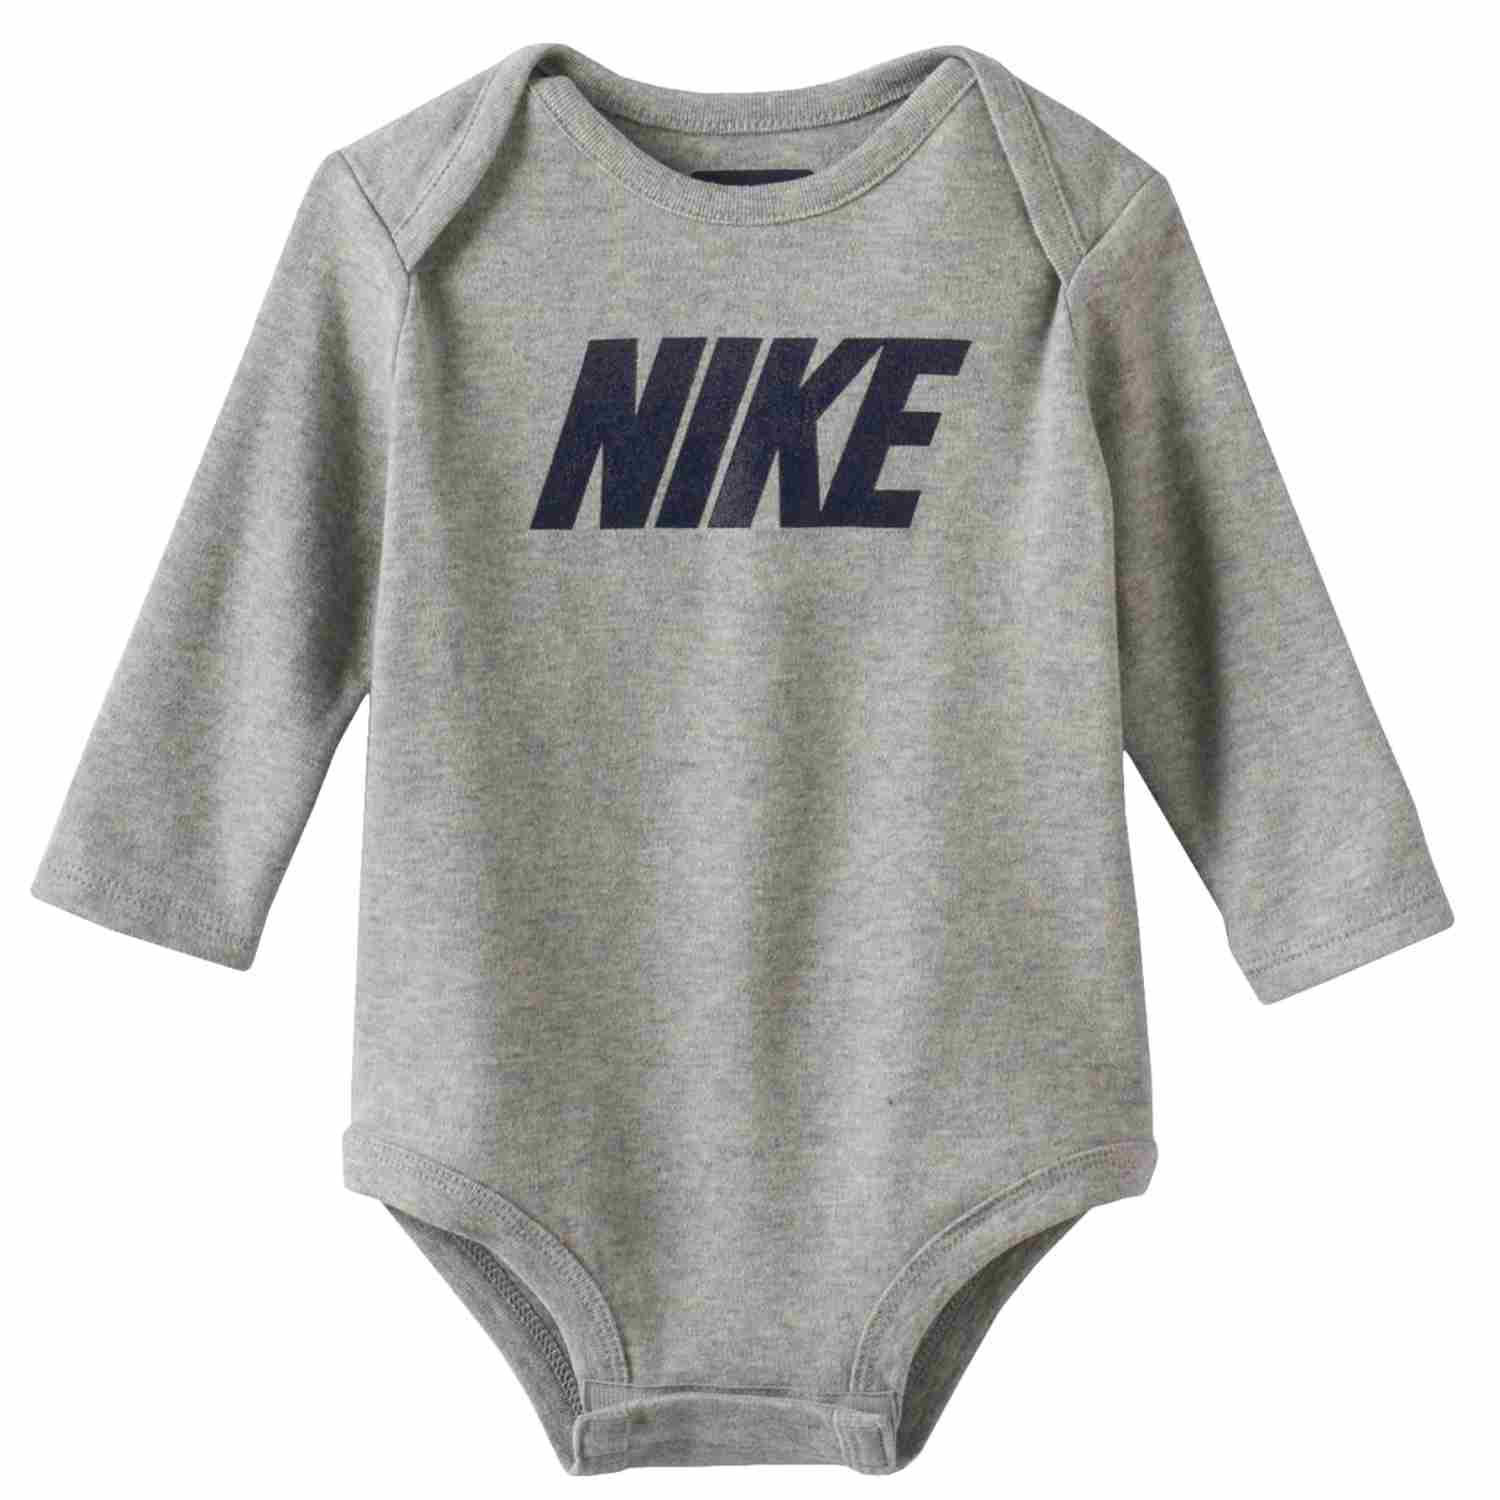 Nike - Nike Infant Boys Gray Bodysuit Snap Bottom T-Shirt - Walmart.com ...